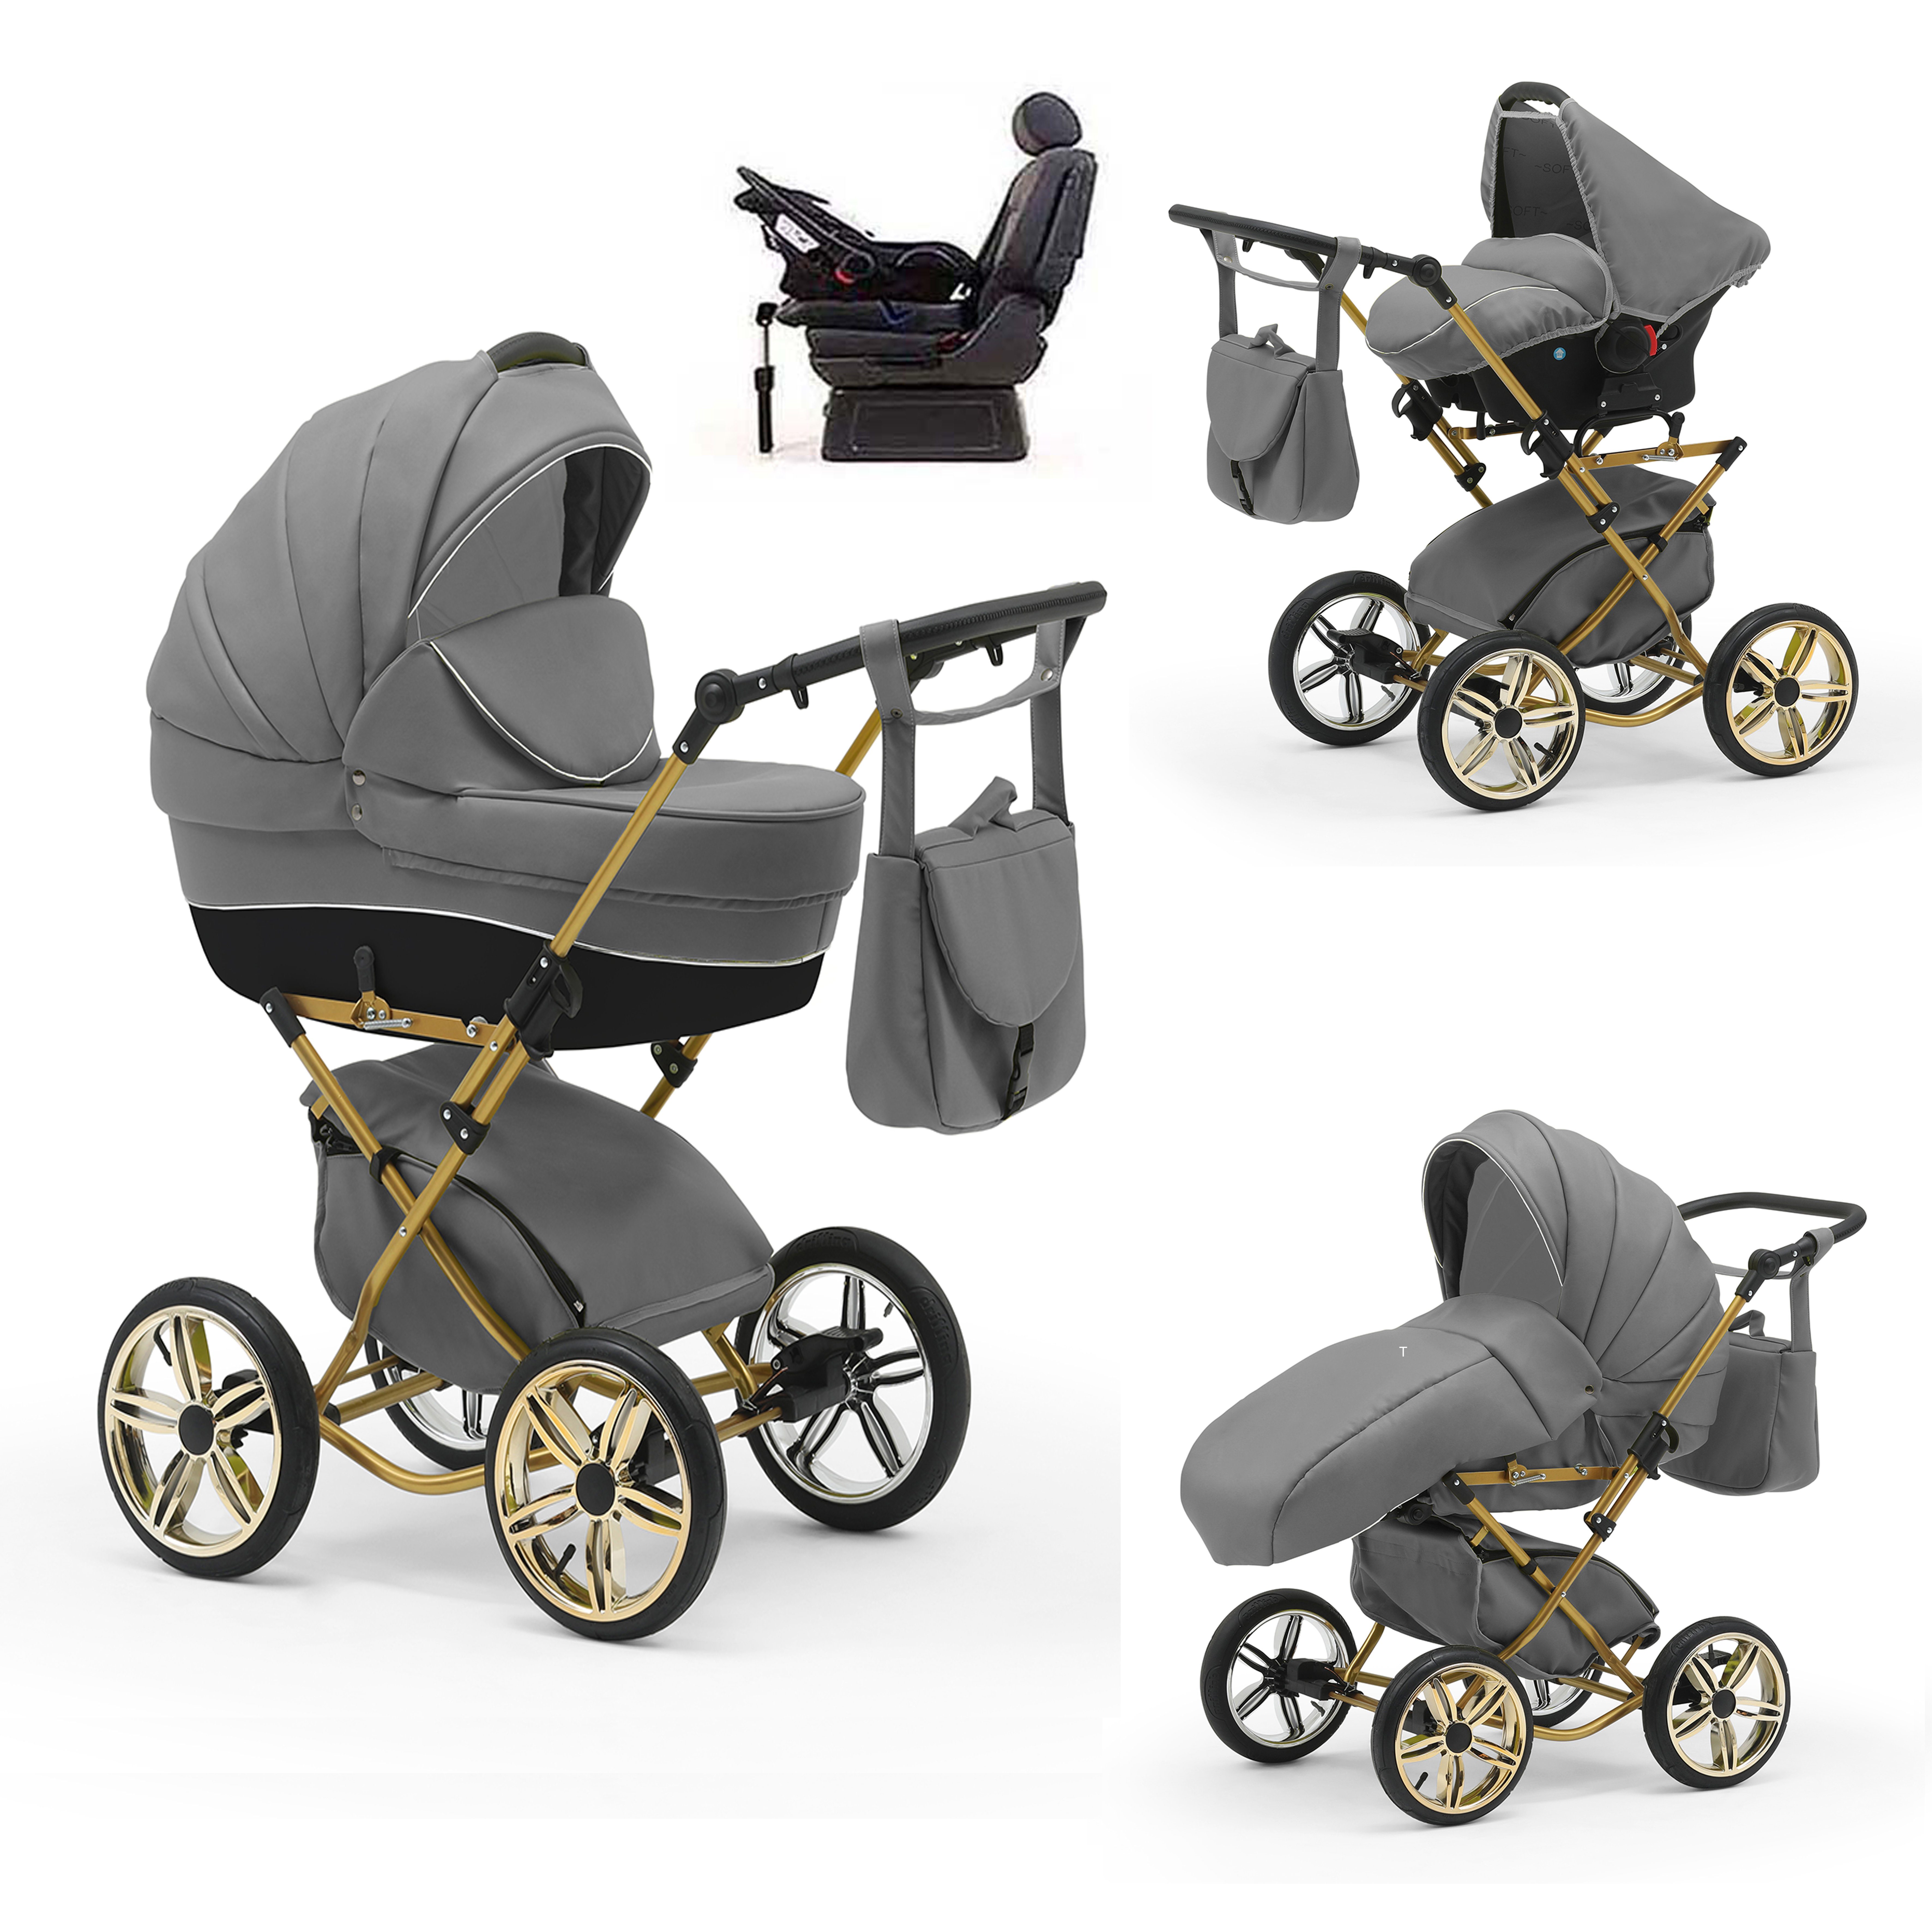 babies-on-wheels Kombi-Kinderwagen Sorento 4 in 1 inkl. Autositz und Iso Base - 14 Teile - in 10 Designs Grau